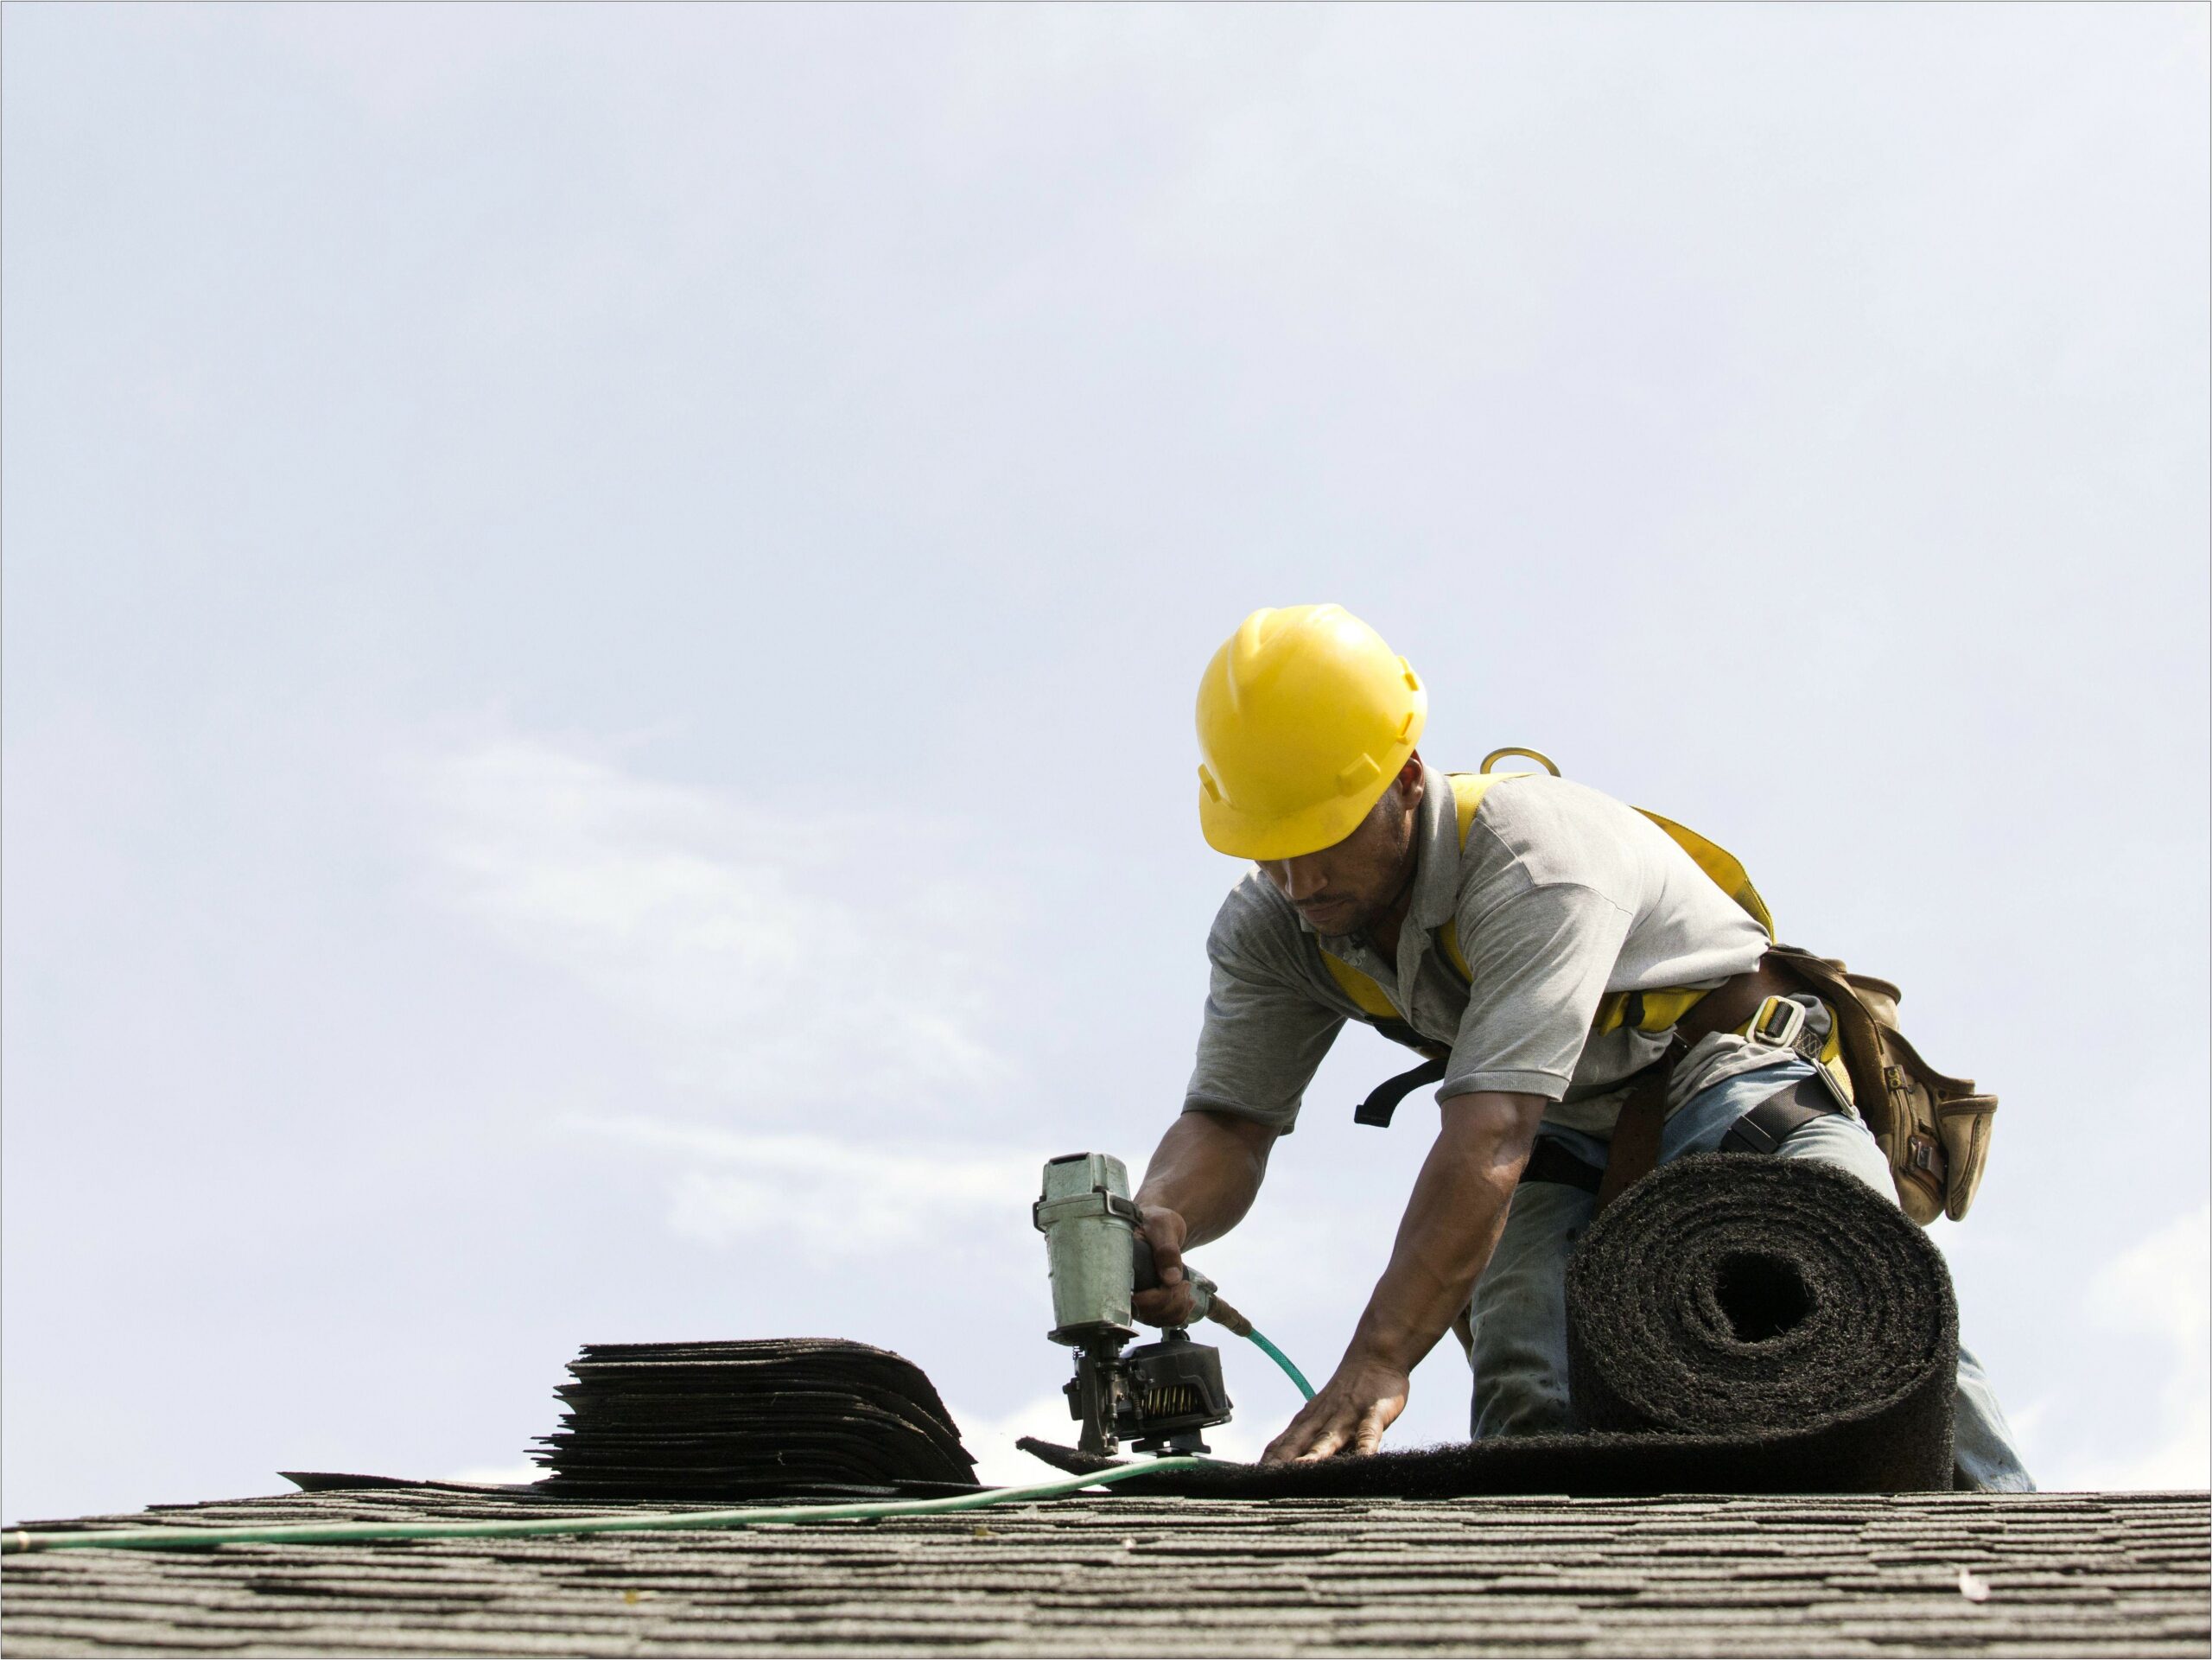 Construction Work Labor Skills For Resume